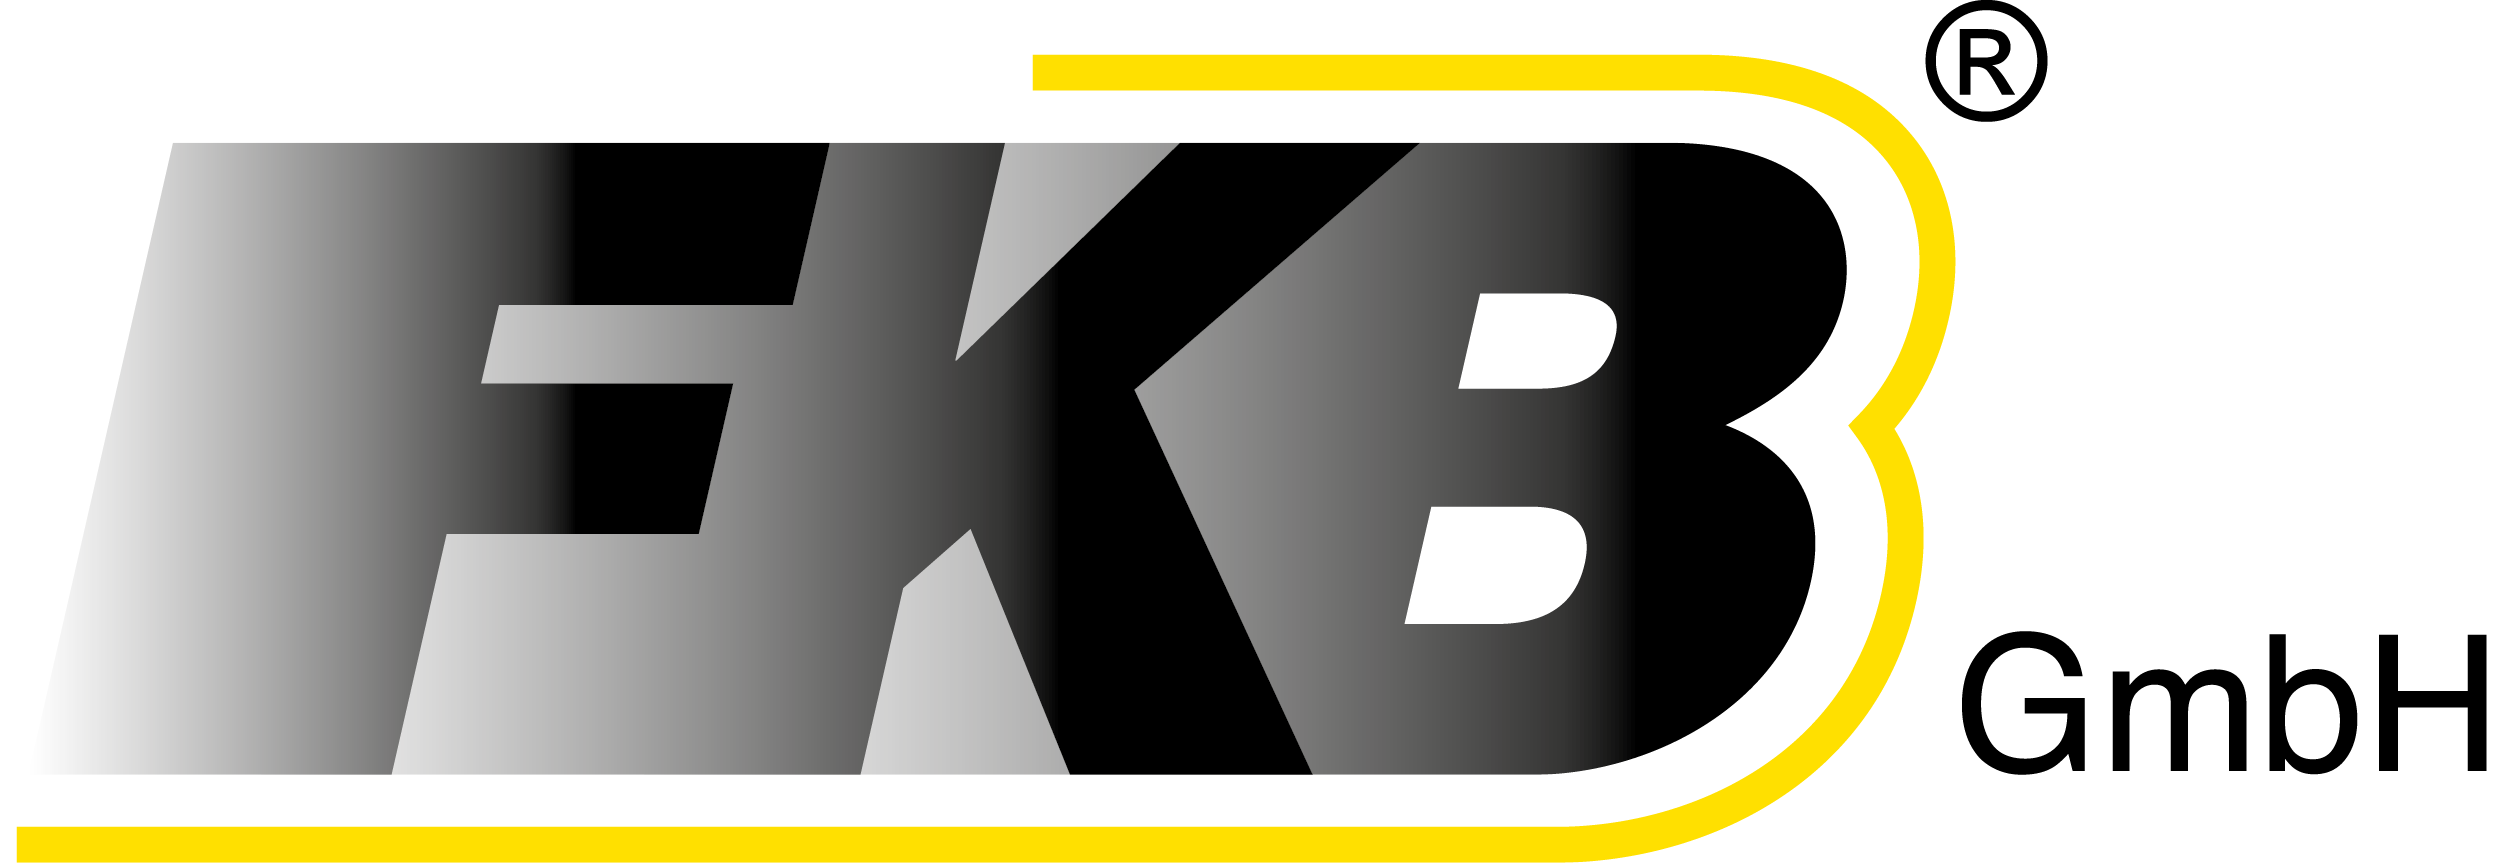 FKB - Logo